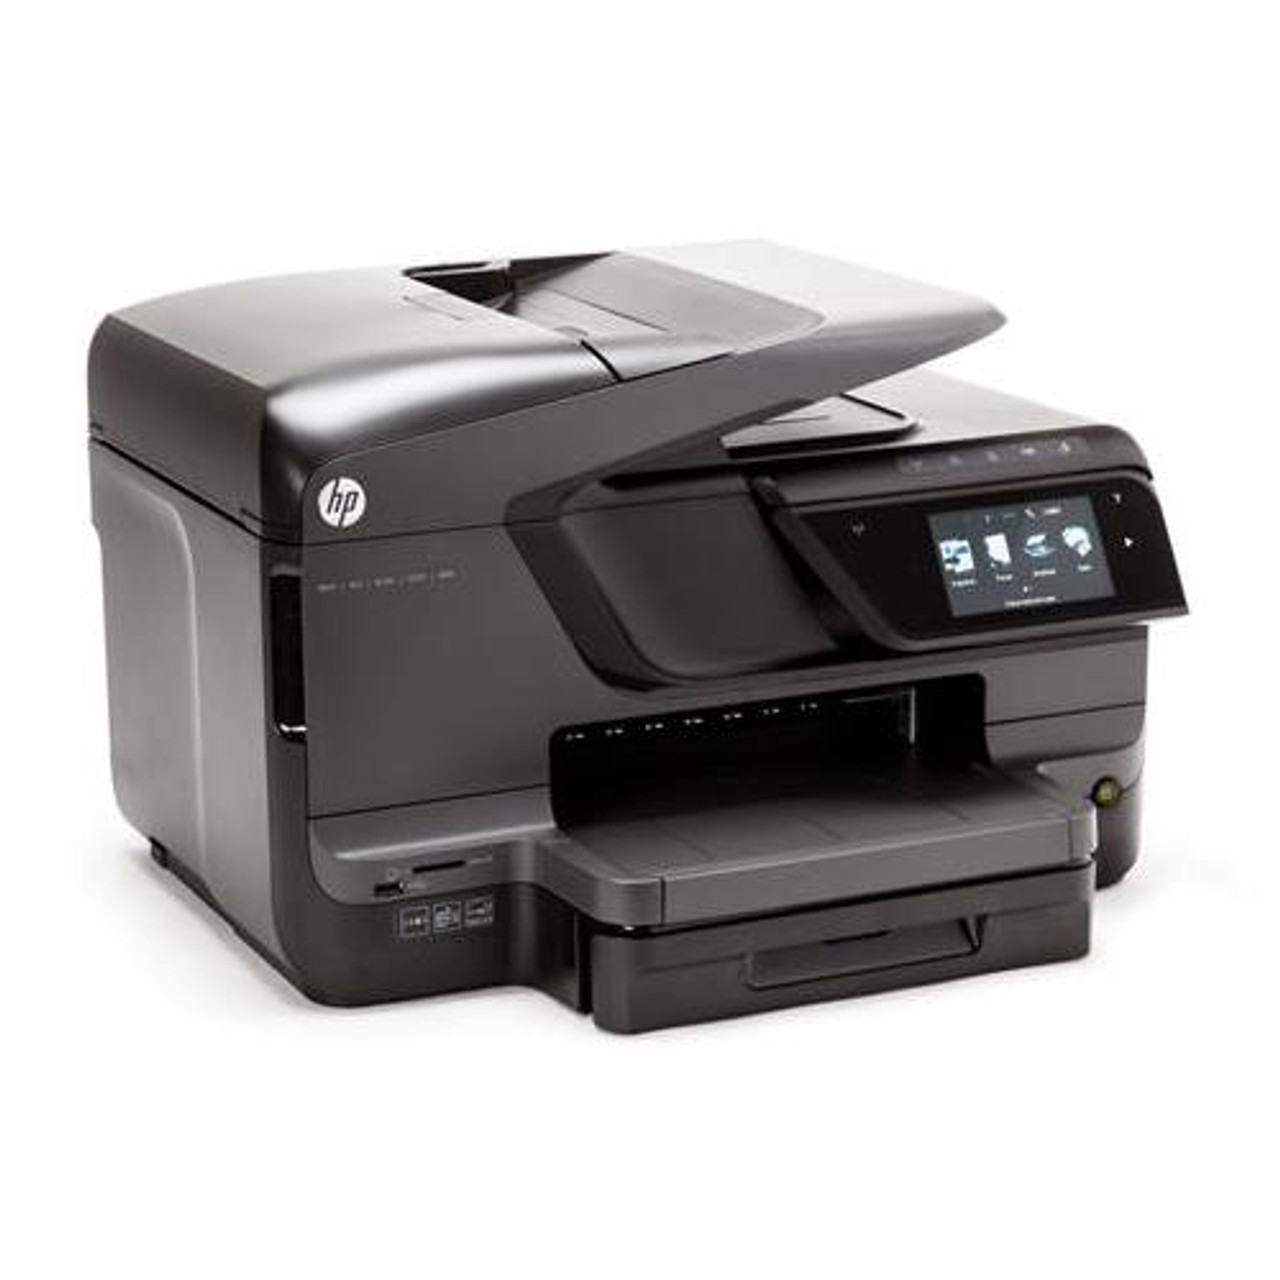 C9299-69402 - HP OfficeJet 7000 Wide Format Printer E809a Exchange Unit Does No